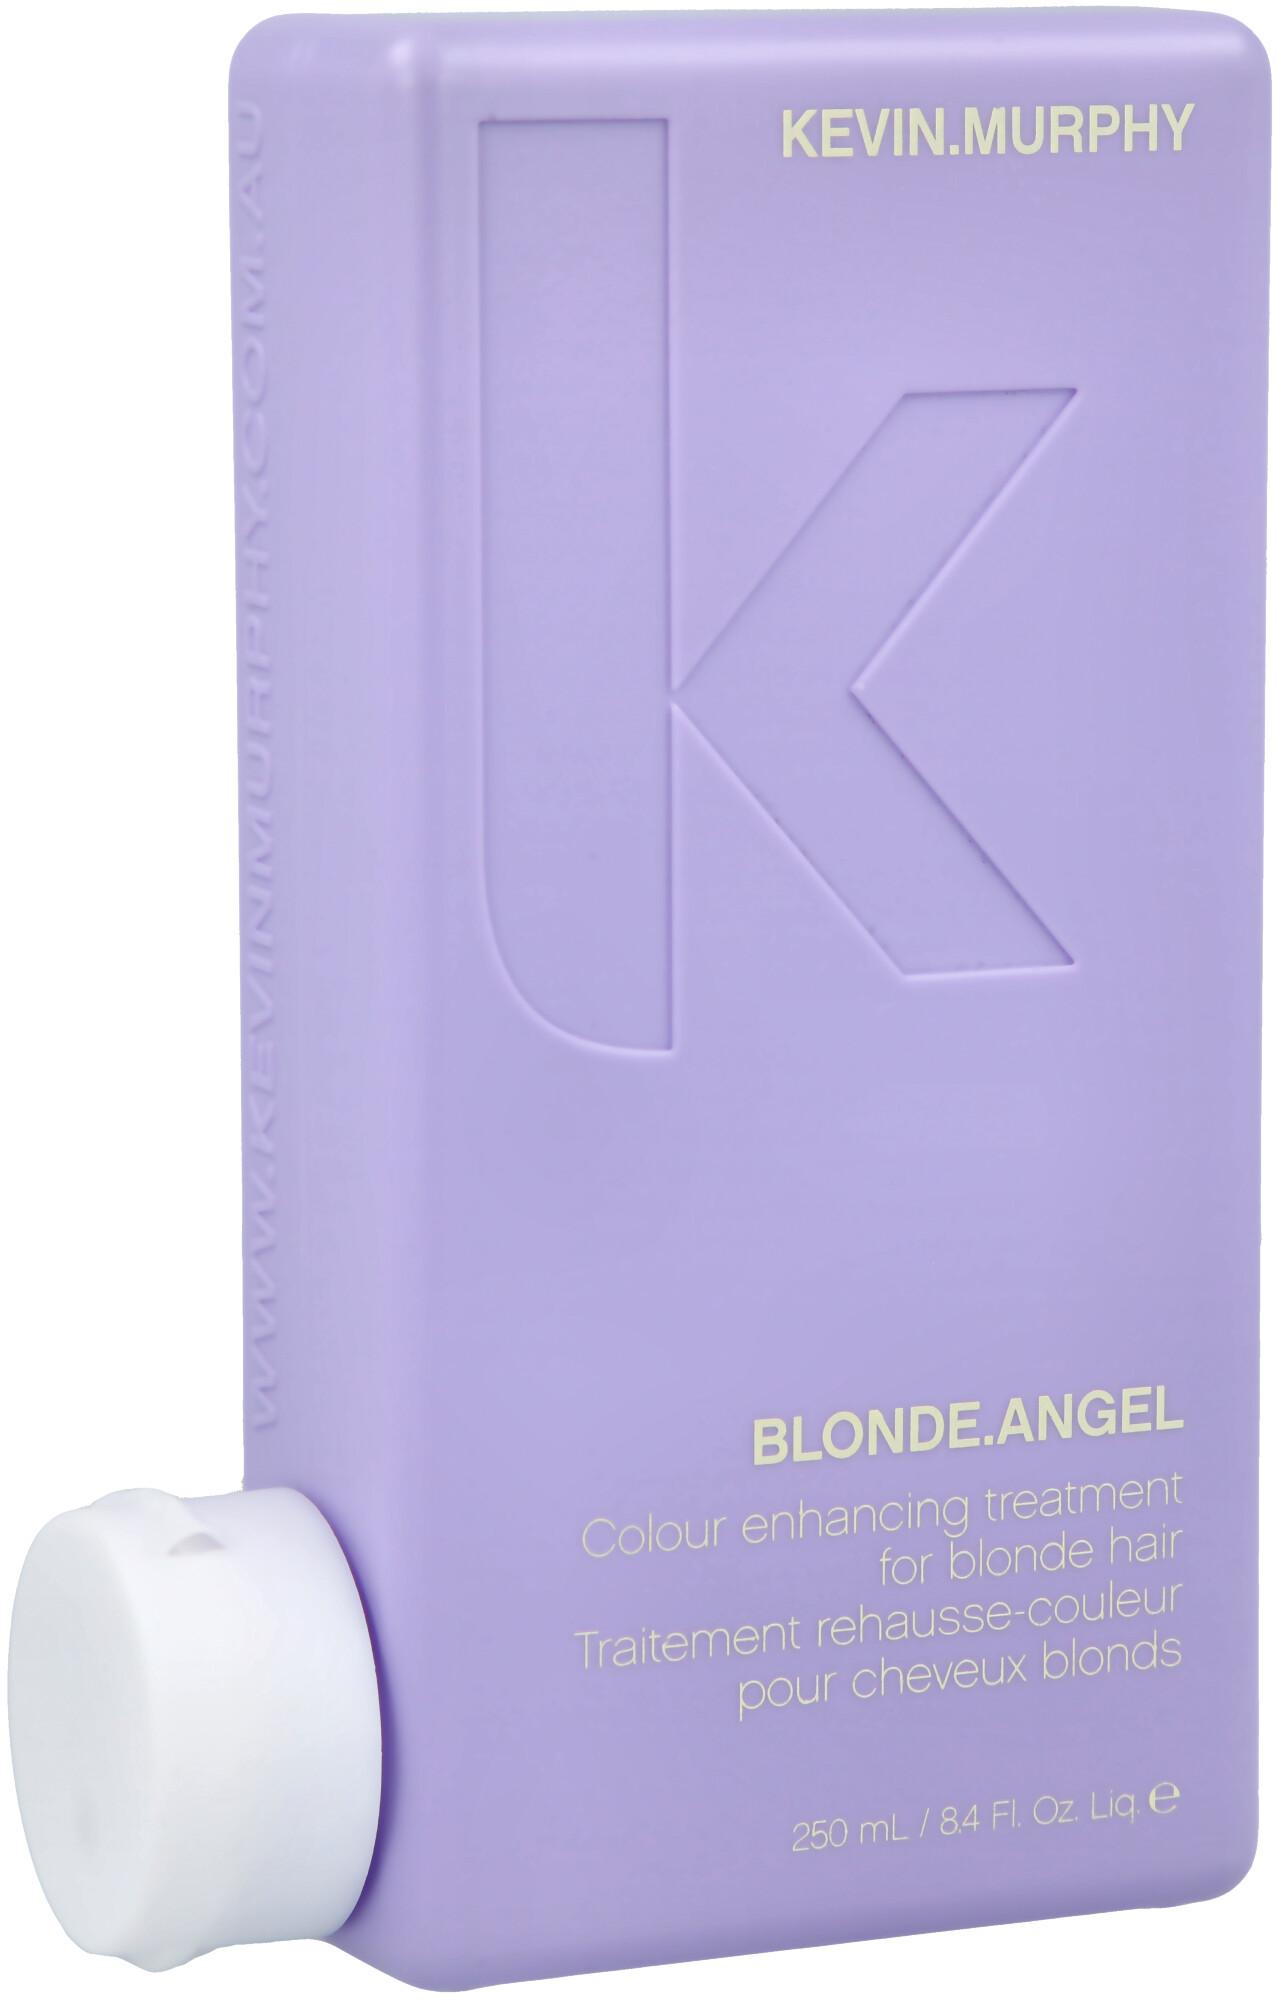 Kevin Murphy Blonde Angel Treatment 250 ml 